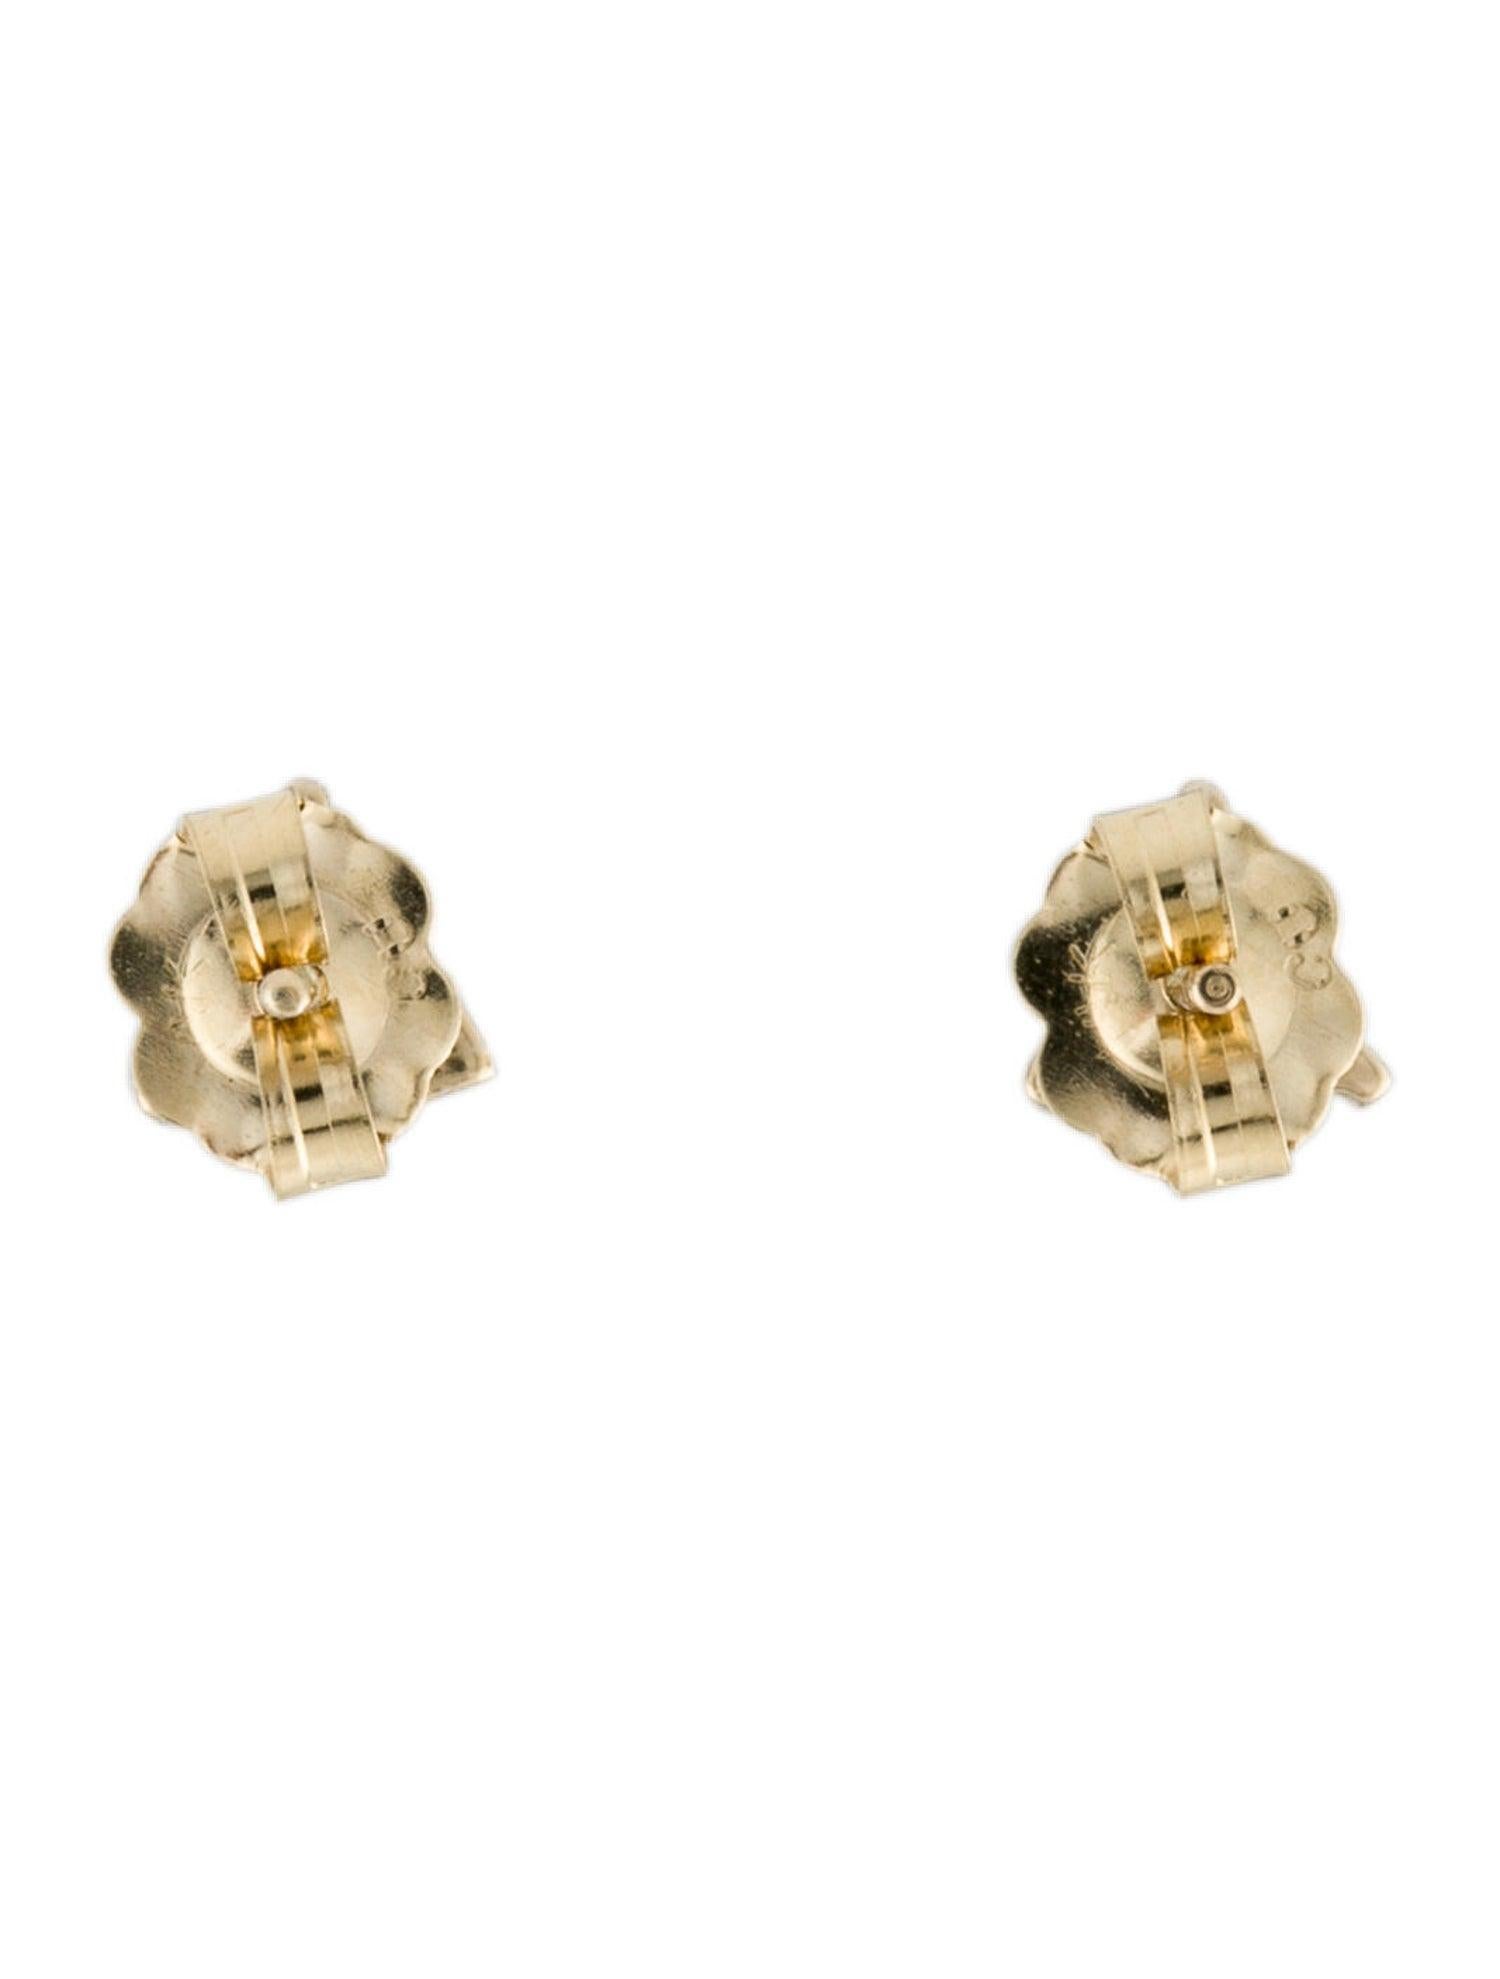 Round Cut 14K Yellow Gold 0.24 Carat Diamond 3 Stone Earrings For Sale